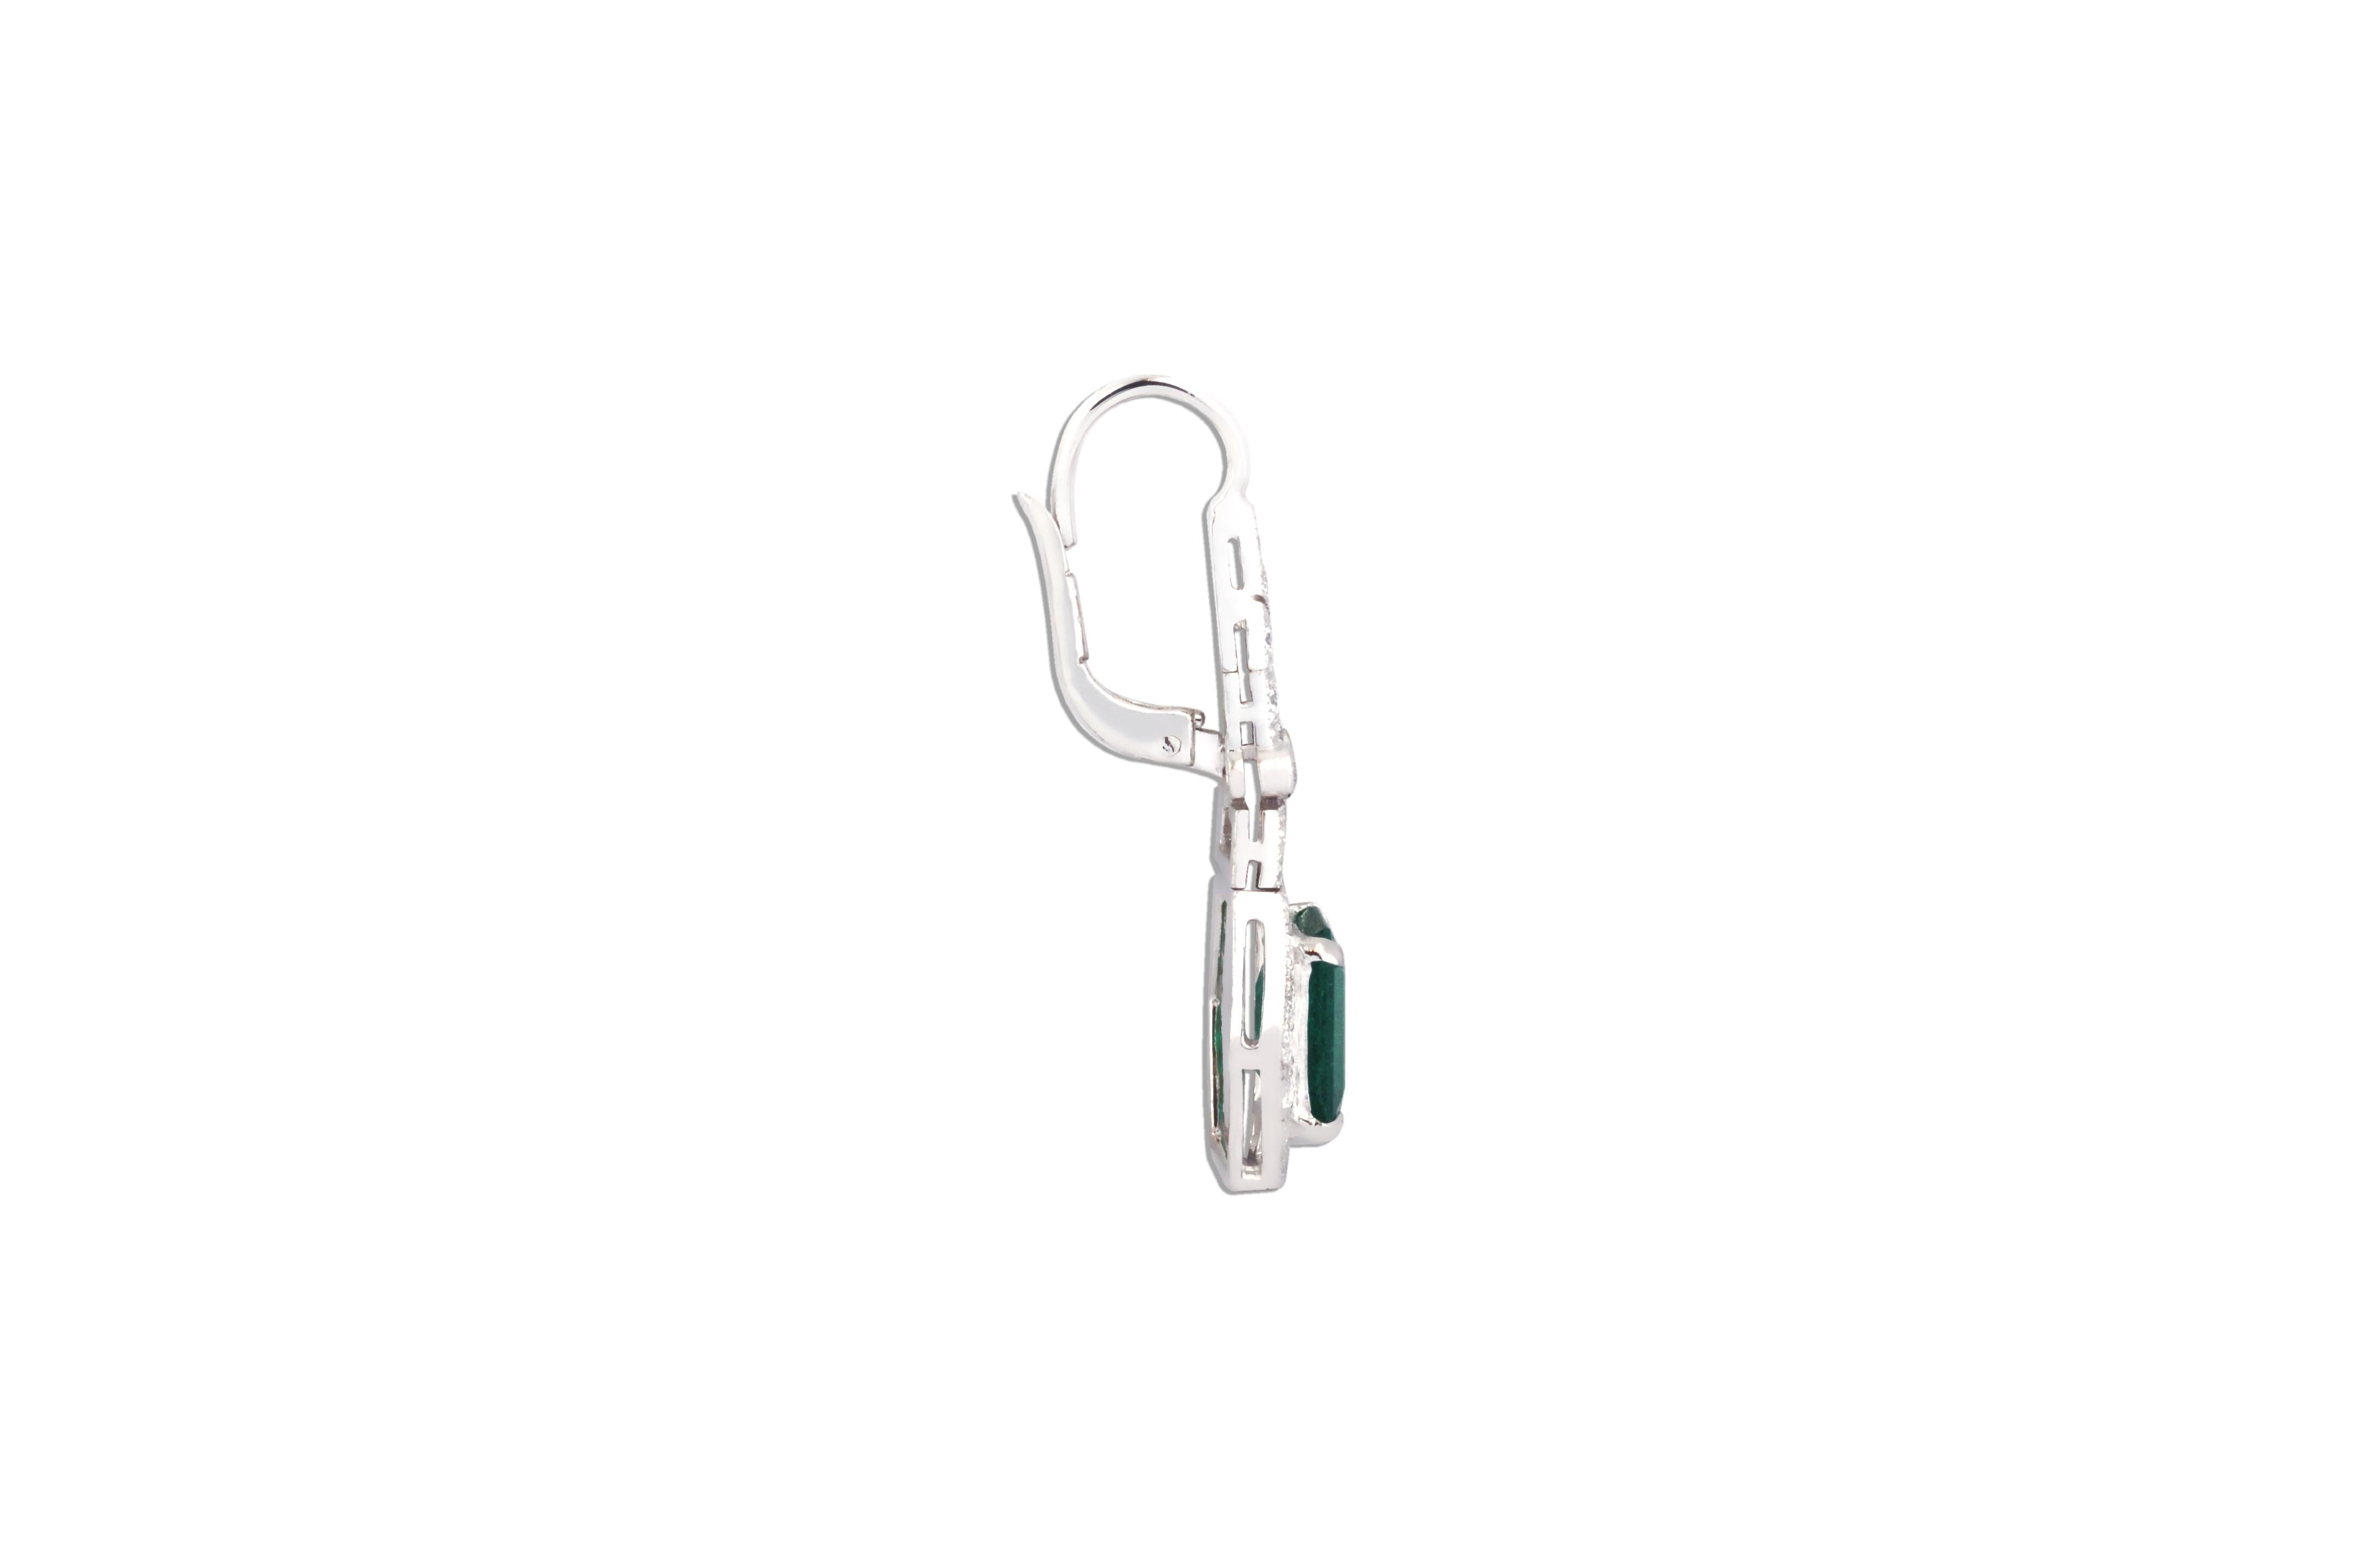 Emerald 3.42 carats with Diamond 0.88 carat  Earrings set in 18 Karat White Gold Settings

Width: 1.0 cm
Length: 3.4 cm

